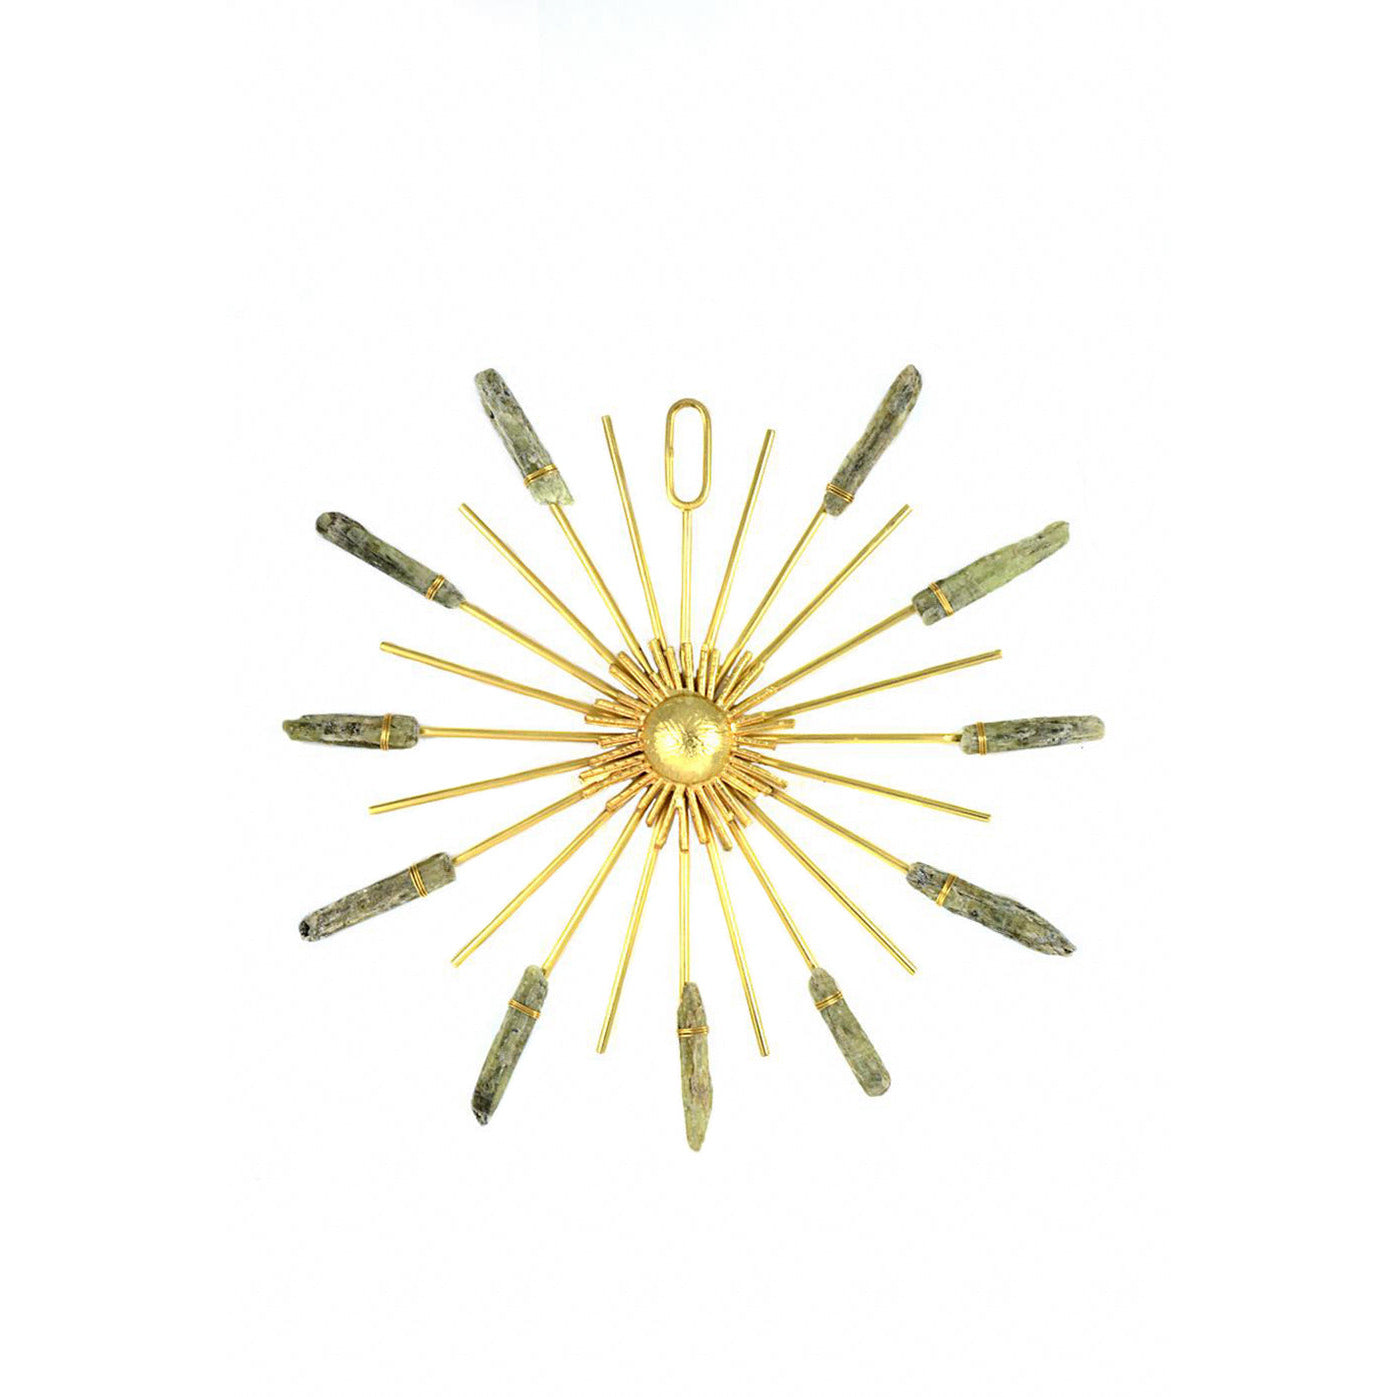 Sunburst Healing Crystal Grid Gold Green Kyanite by Ariana Ost